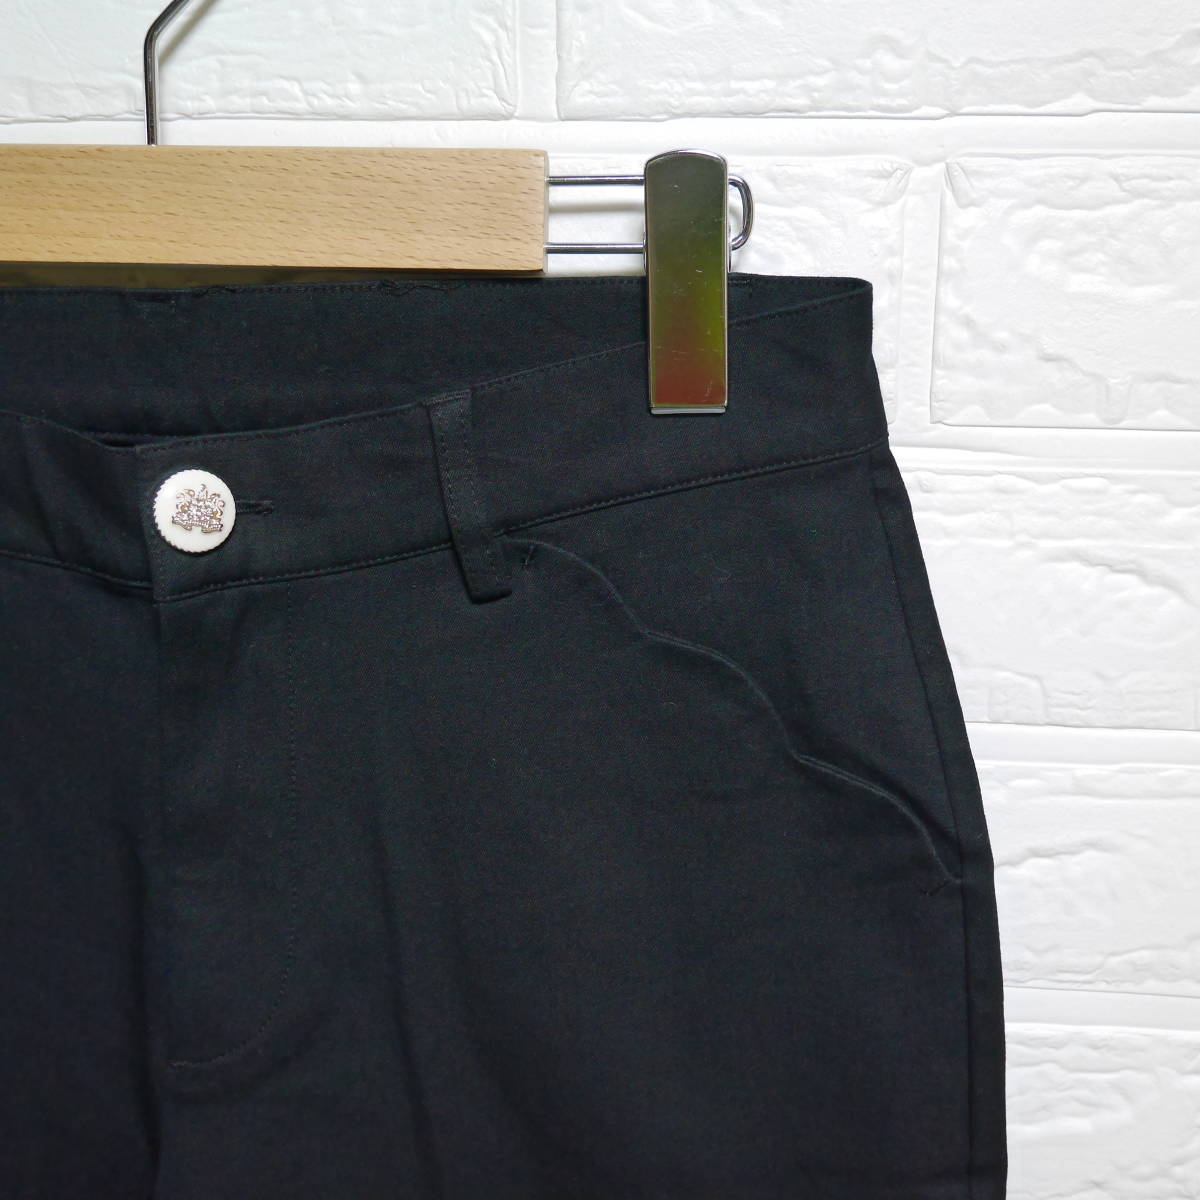 A502 * MALIANI | Mali a-ni capri pants black used size 11